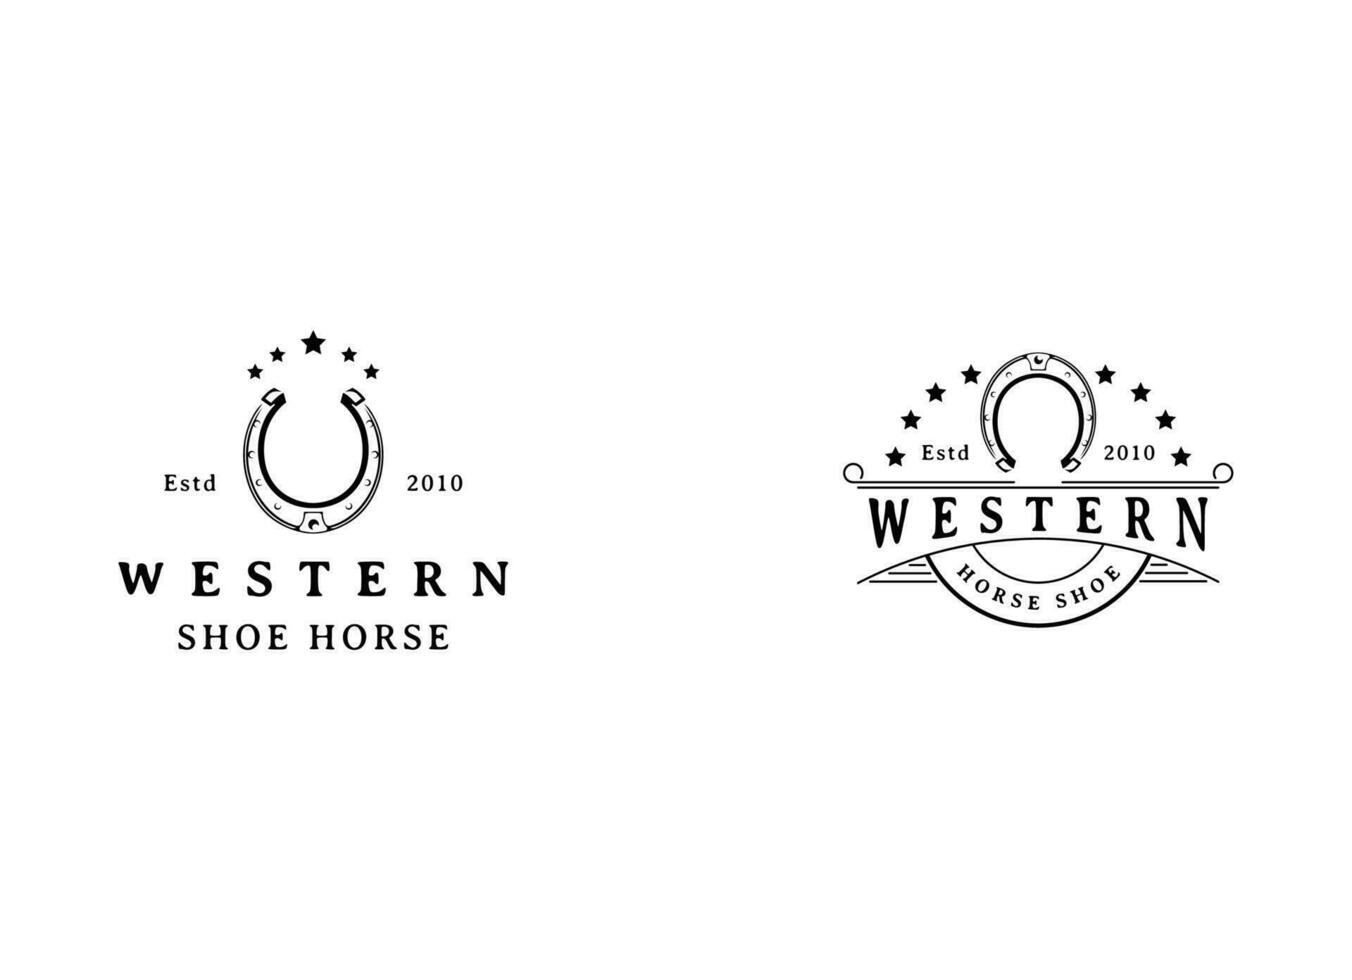 Shoe Horse Horseshoe for Country Western Cowboy Ranch logo design inspiration vector